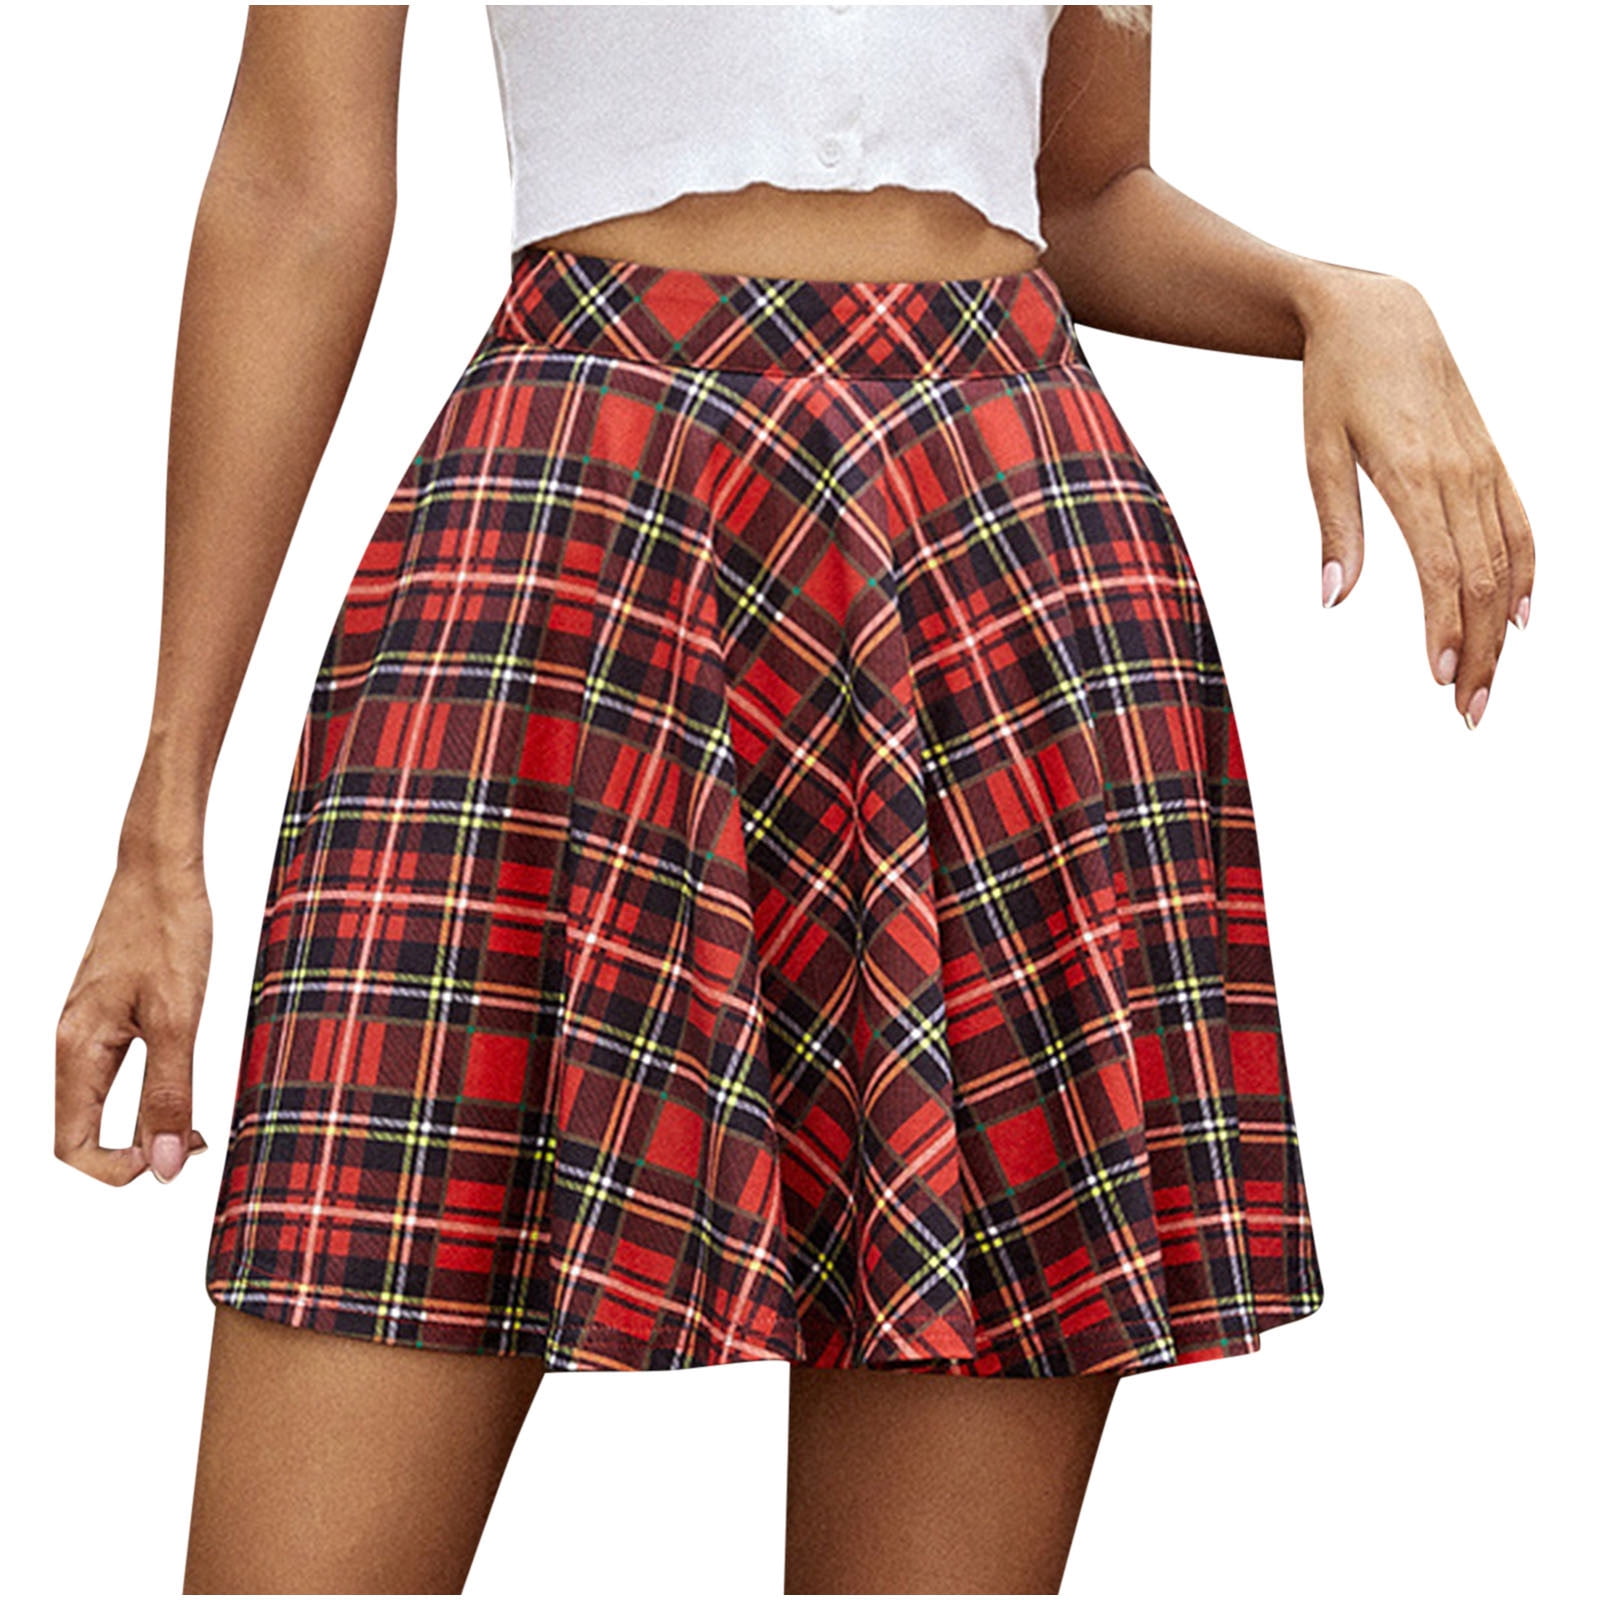 Women's Stretch High Waist Flared Ruffle Chequered Striped A-line Mini Skirt BS 